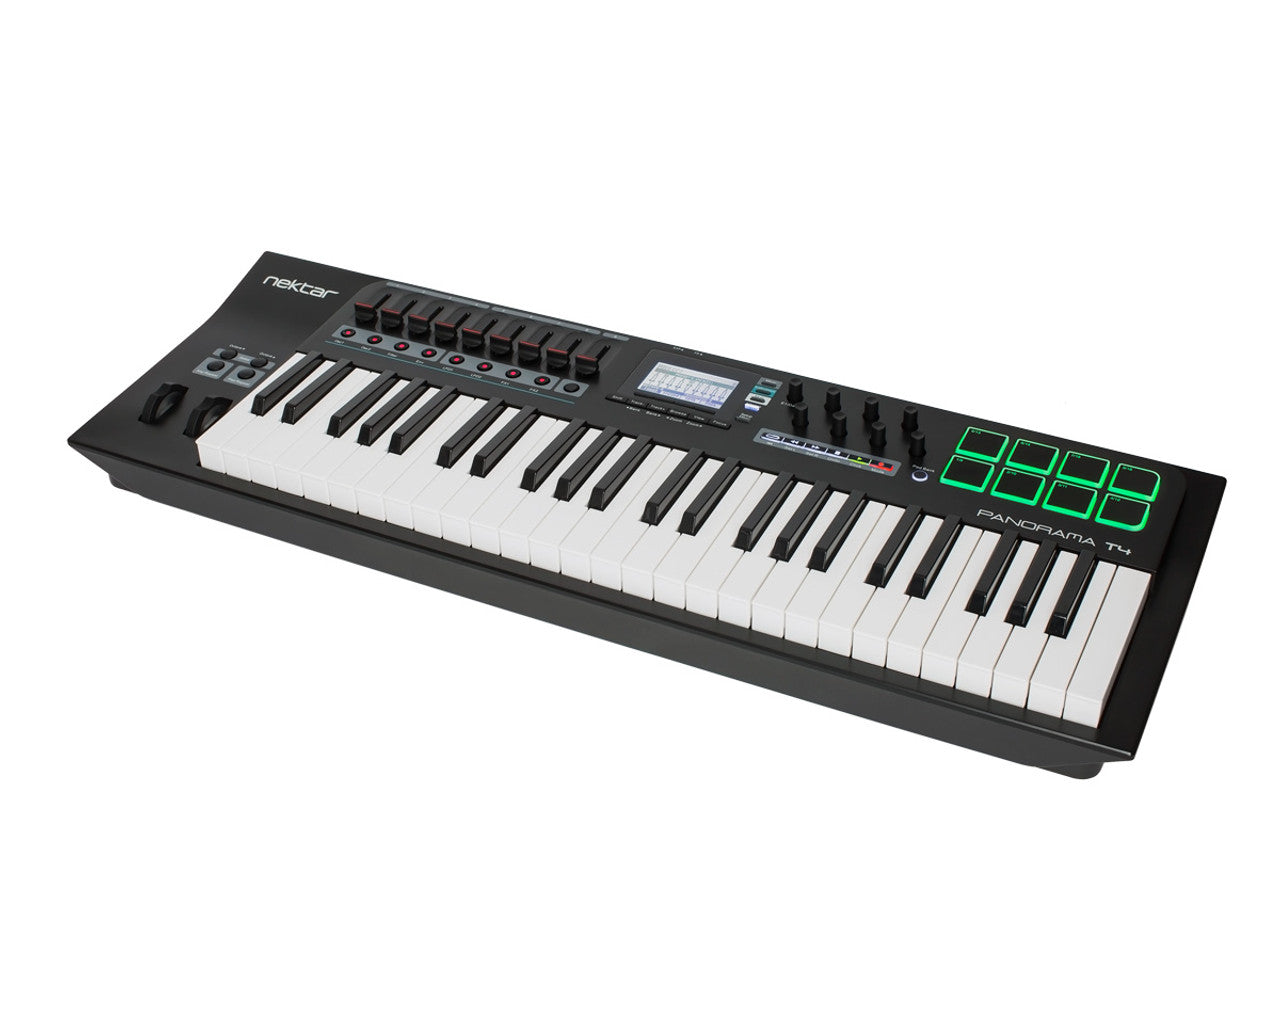 Nektar Panorama T4 49-key MIDI Controller Keyboard